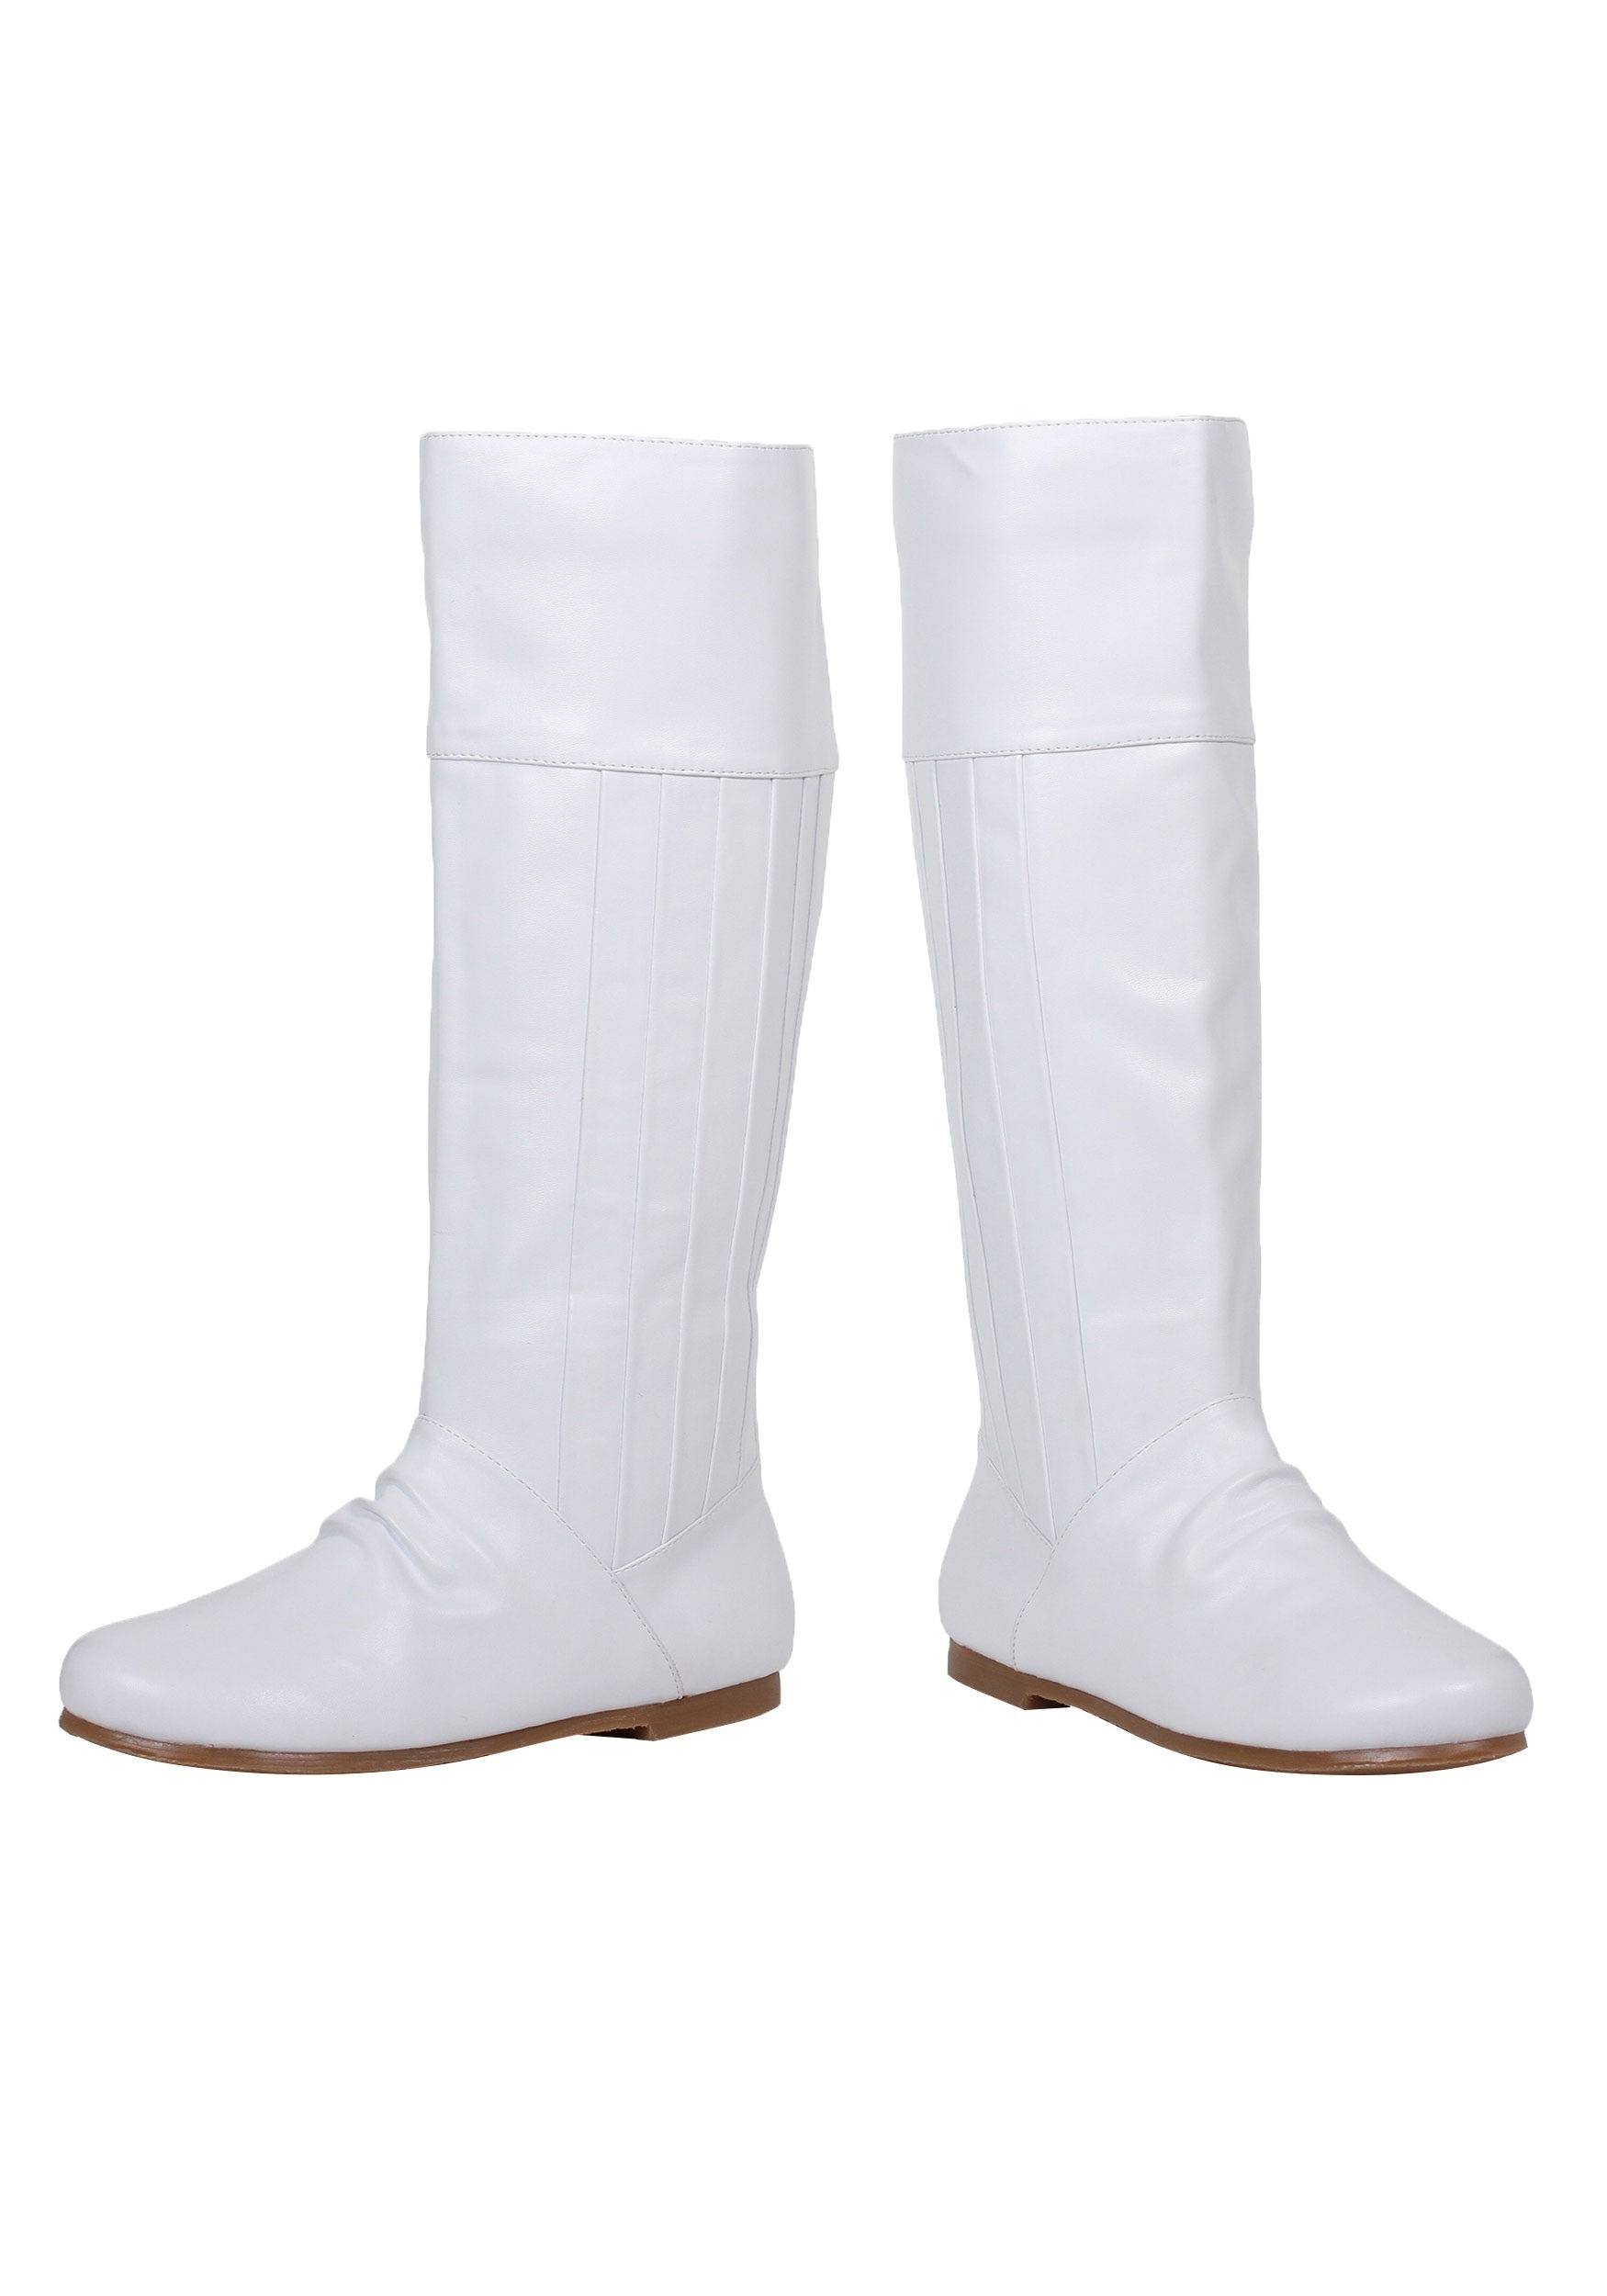 white boots white princess boots eoildpv